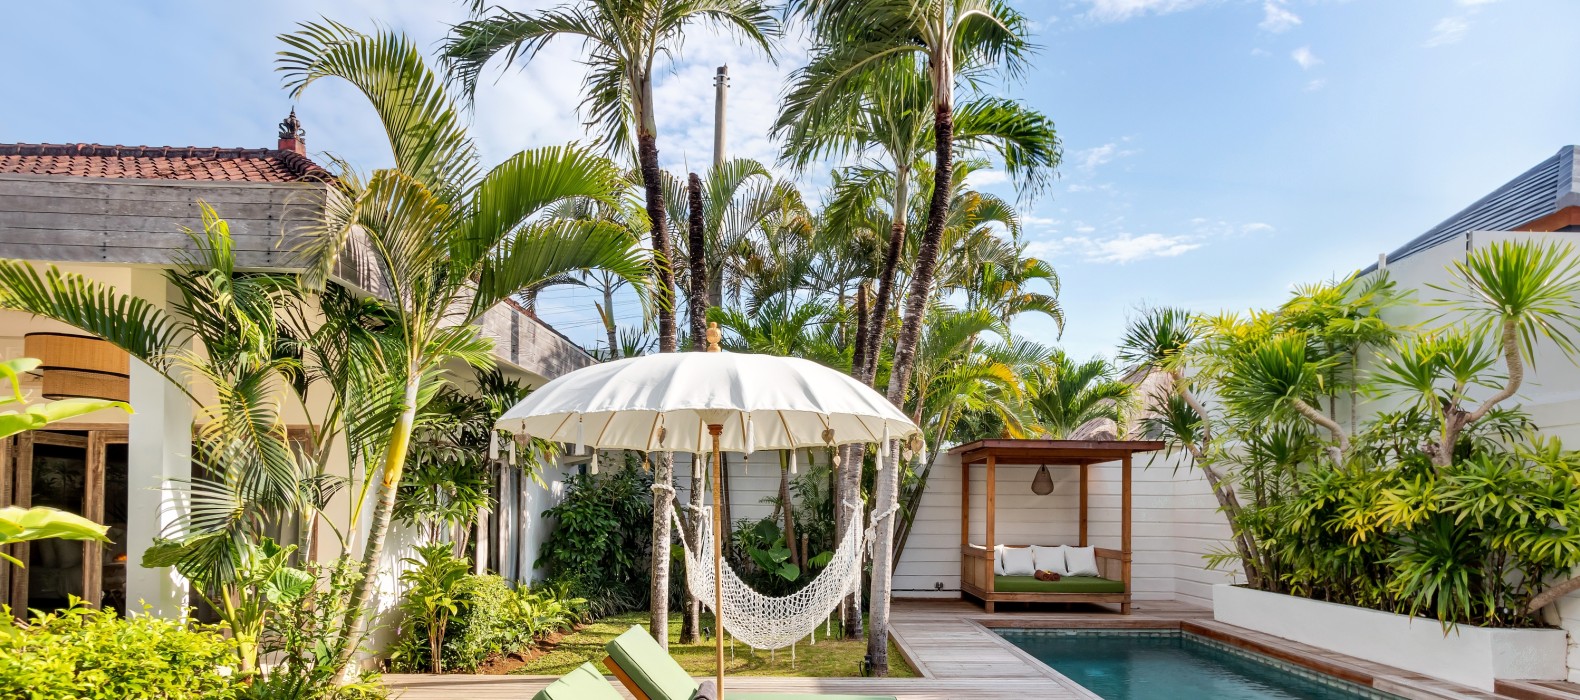 Sun loungers view of Villa Gauguin in Bali